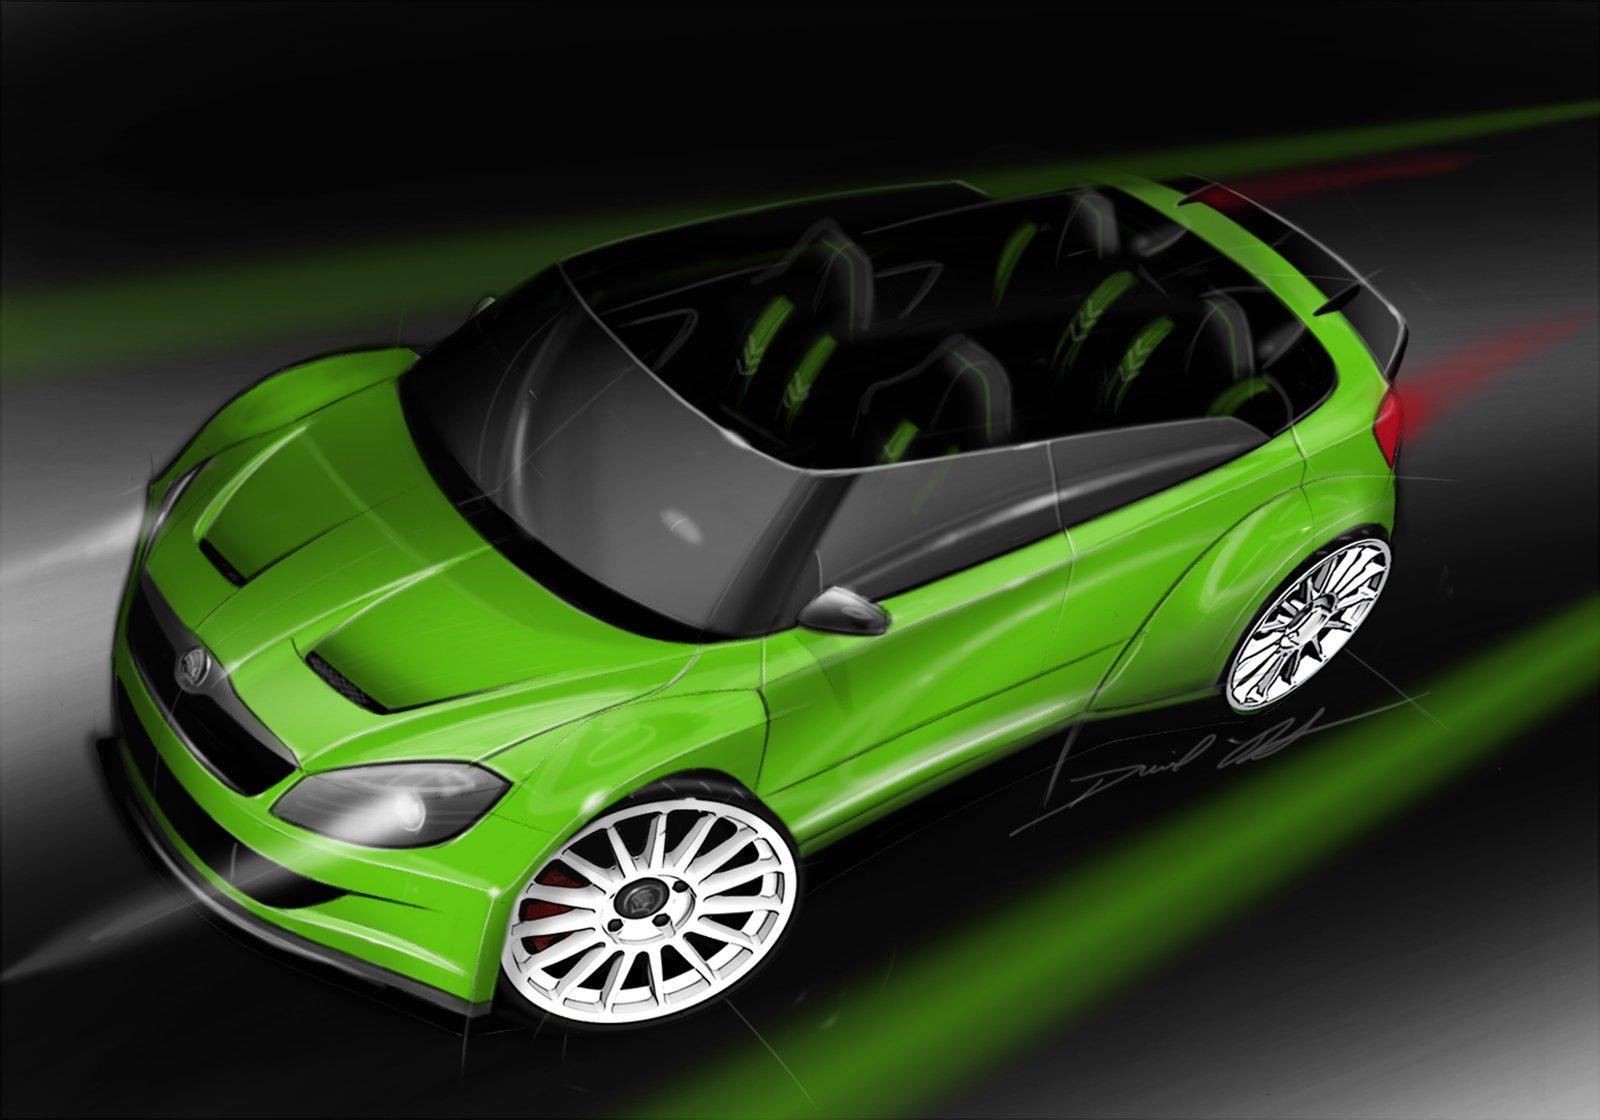 Skoda Fabia RS 2000 Design Concept a fost realizata special pentru Worthersee 2011